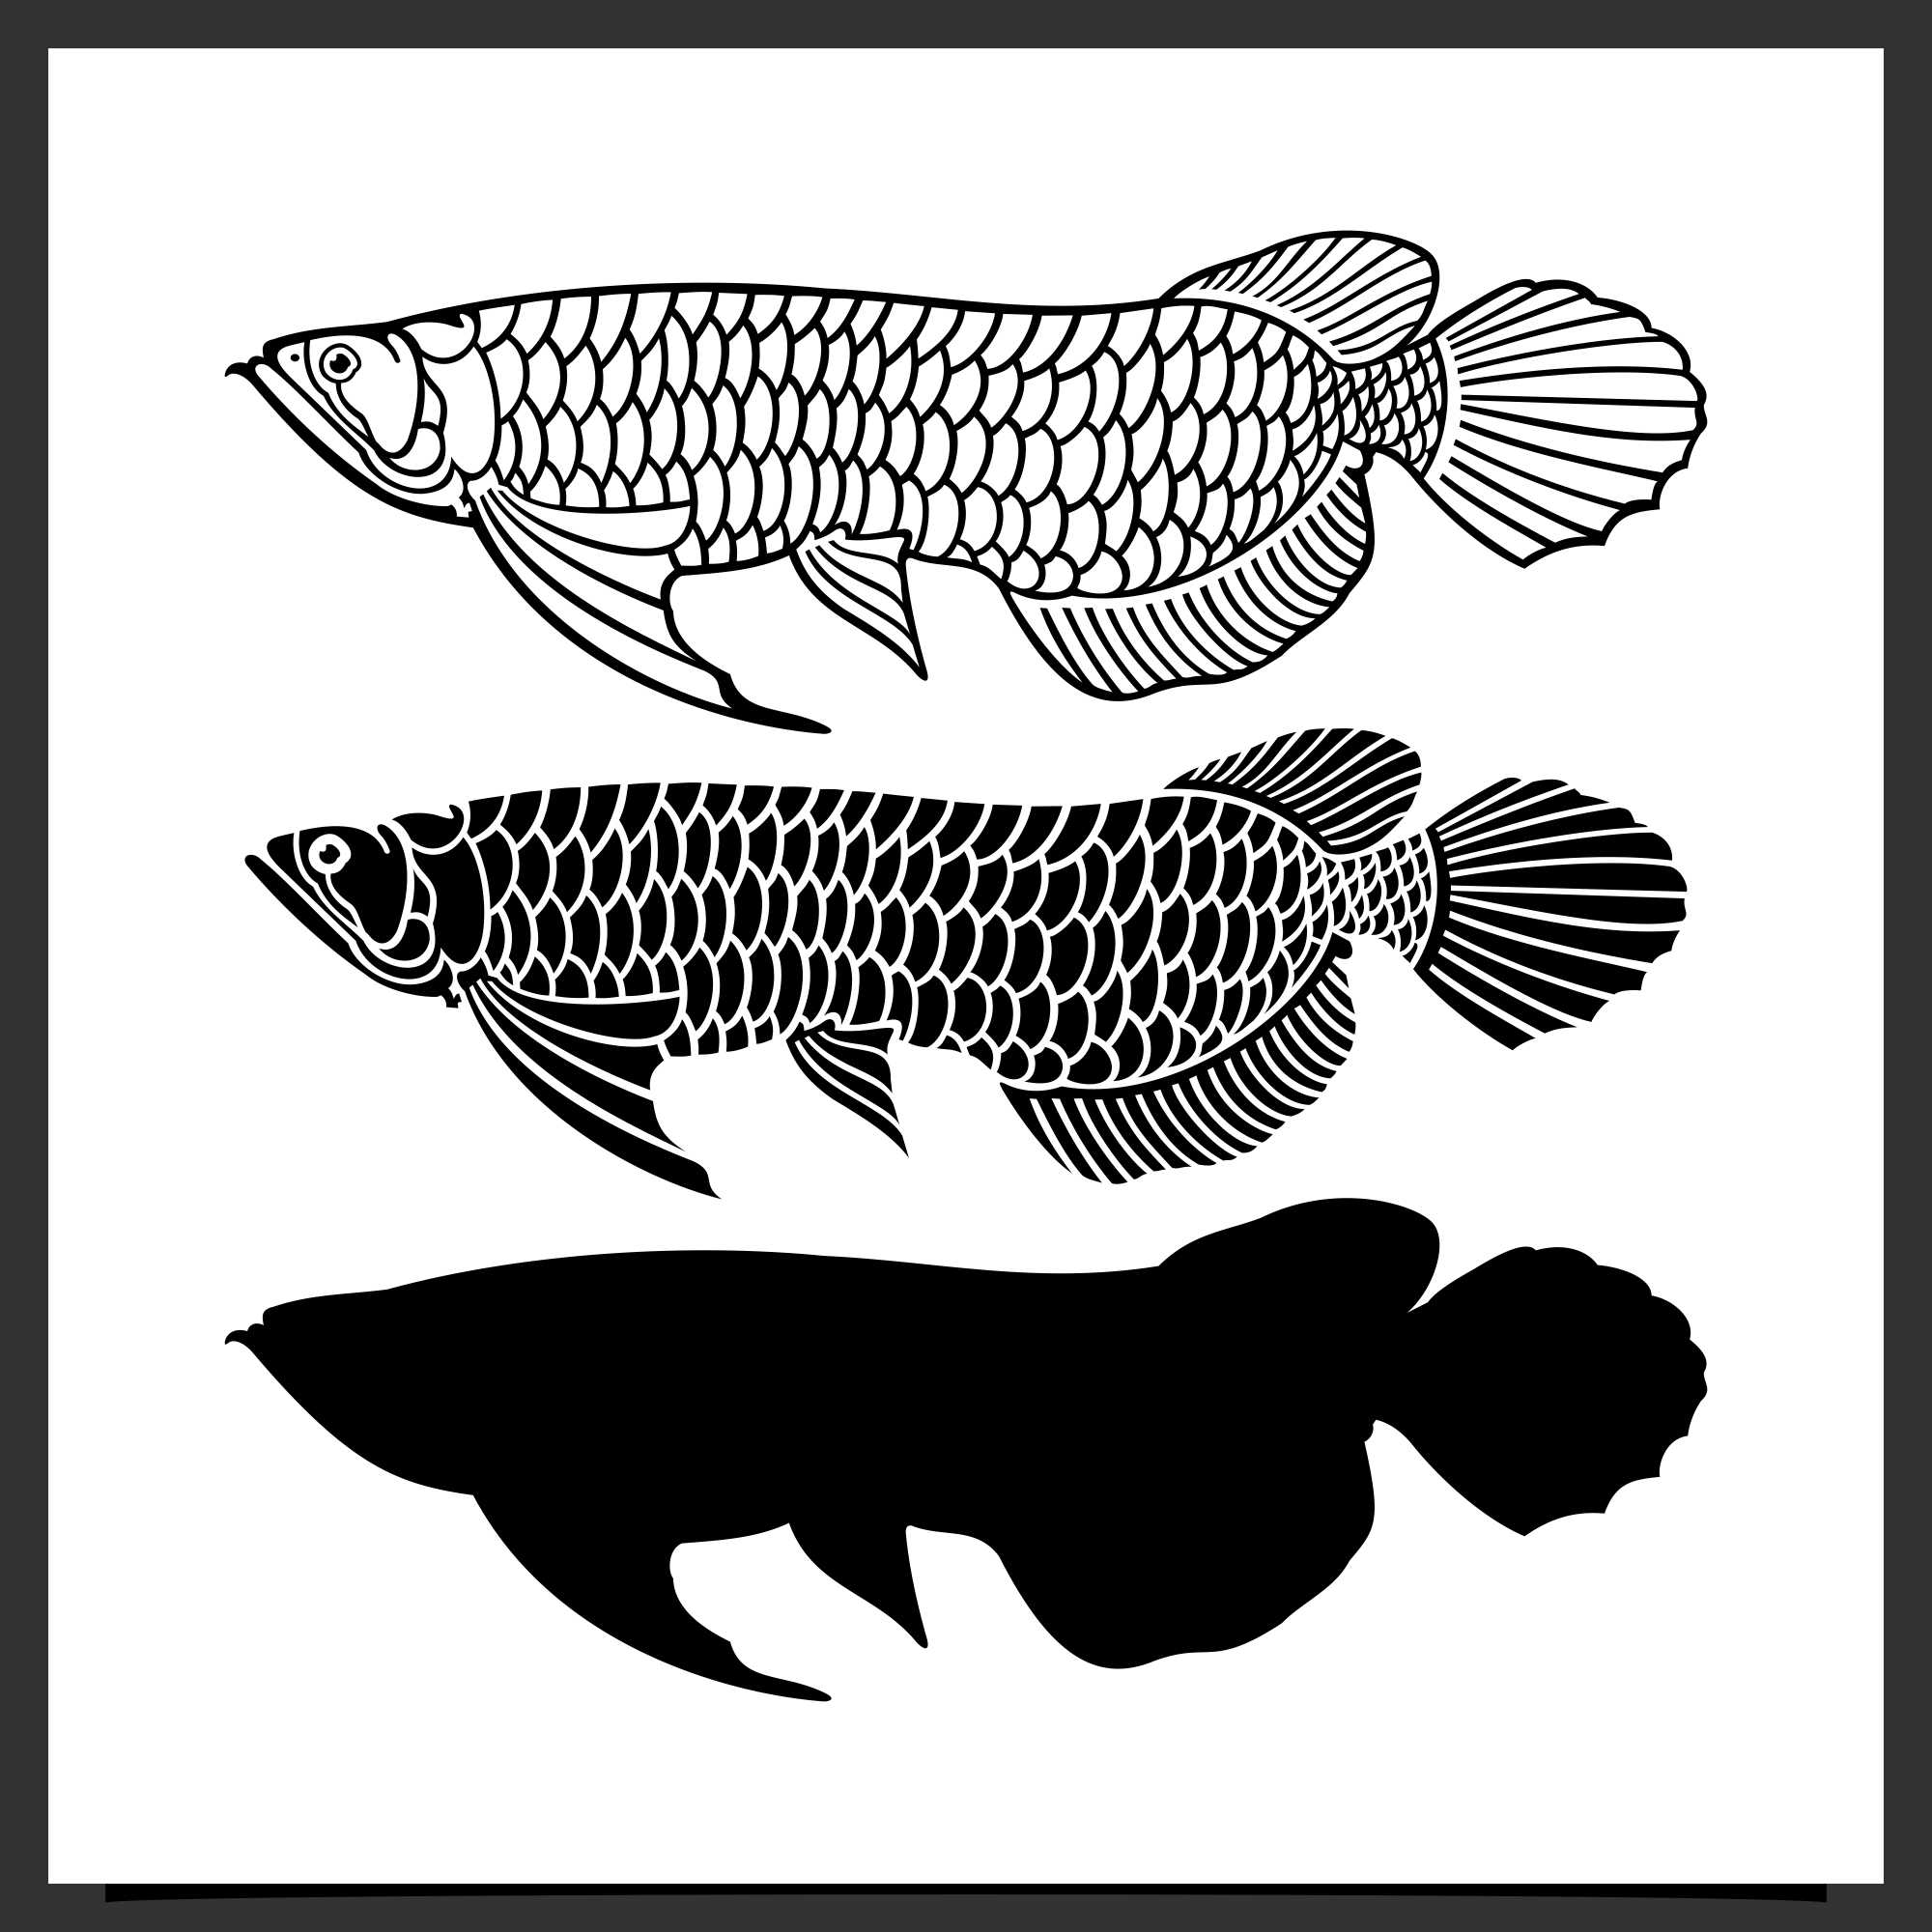 Set Arowana fish vector silhouette design - $4 cover image.